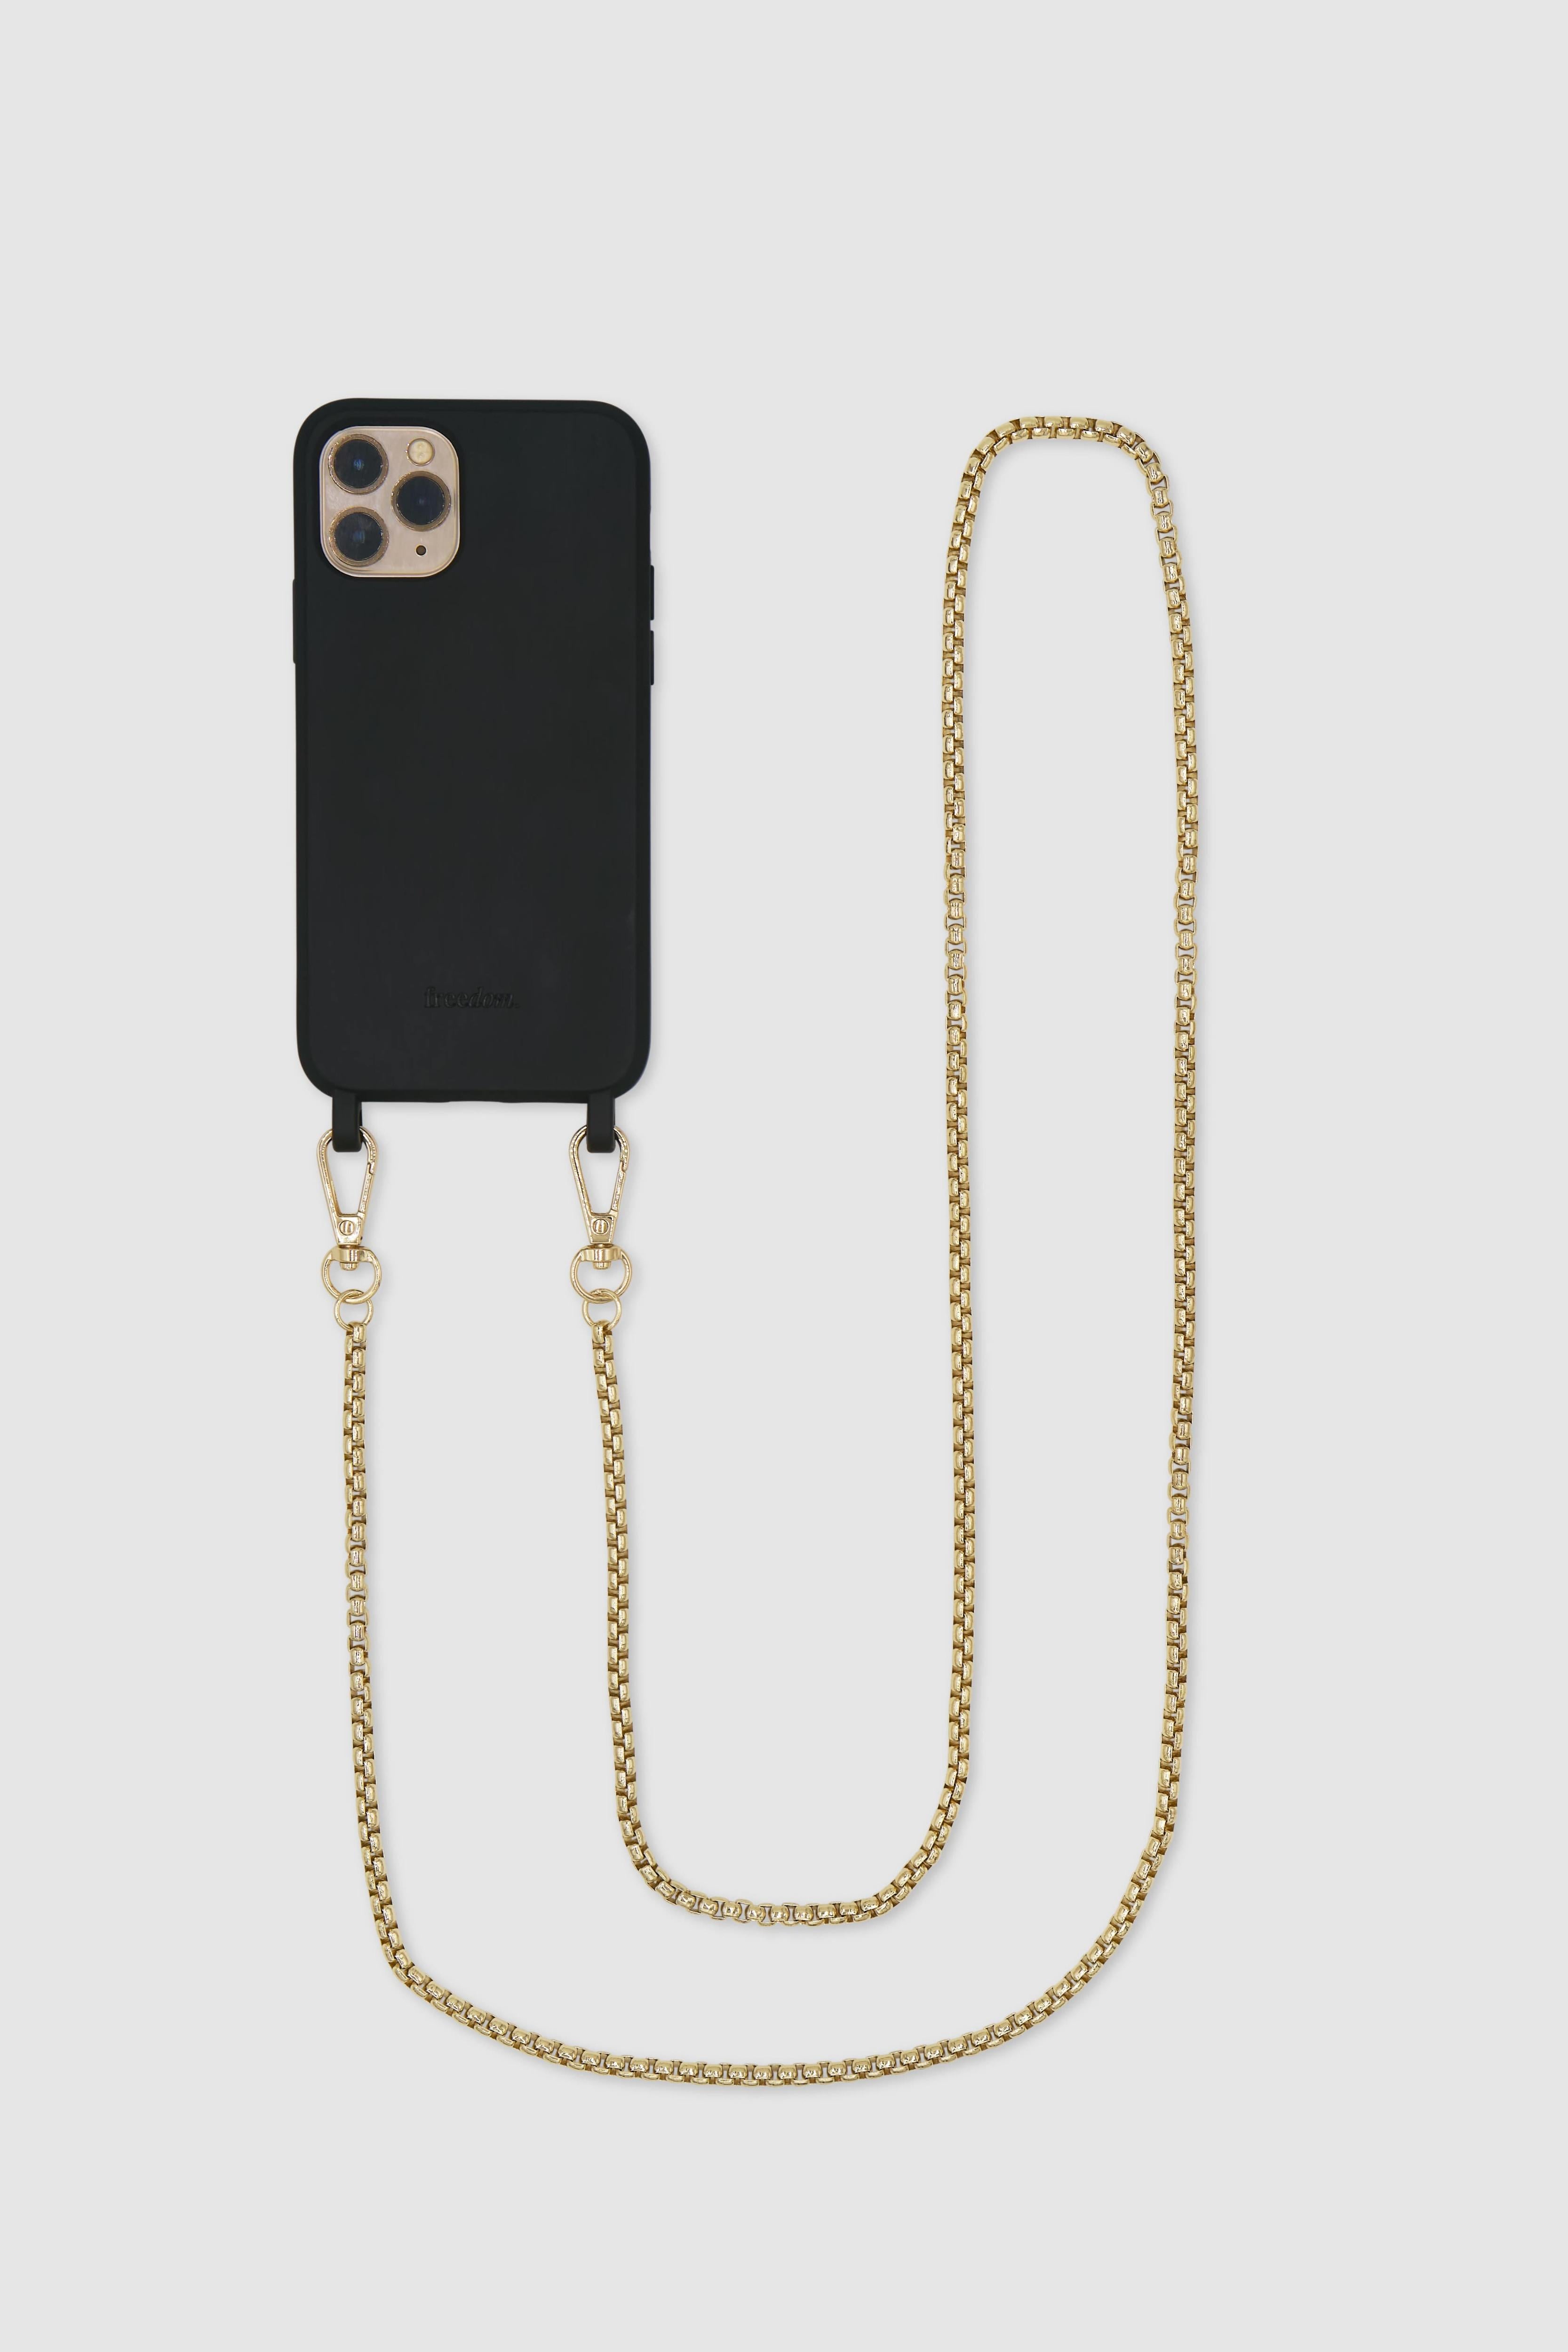 Bundle - Gold Crossbody Chain + Phone Case